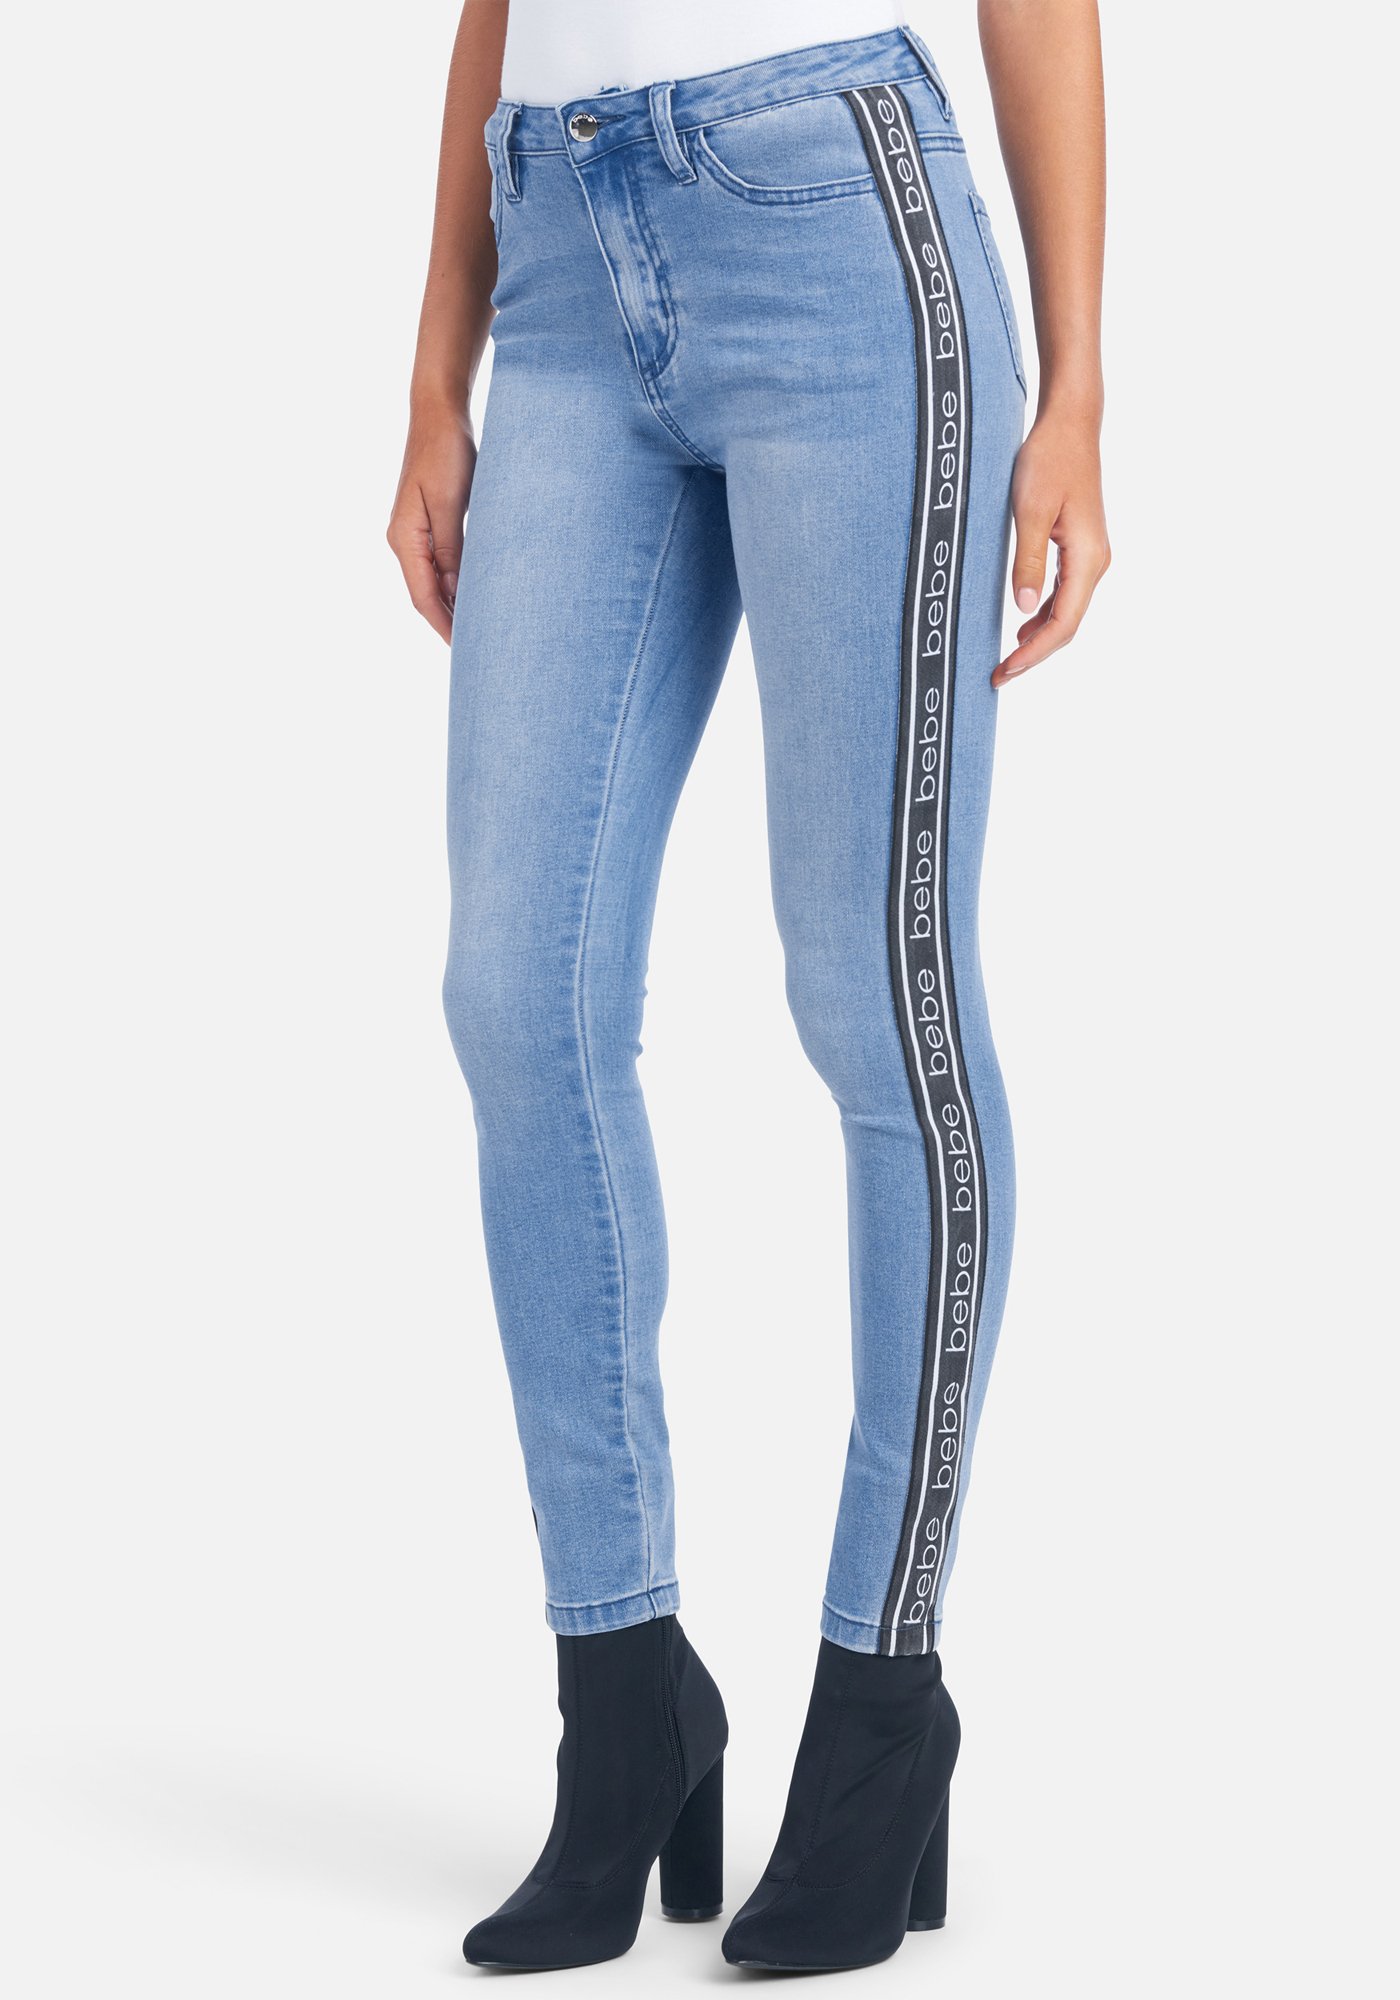 Women's Bebe Logo Side Taping Jeans, Size 28 in Medium Wash Cotton/Spandex